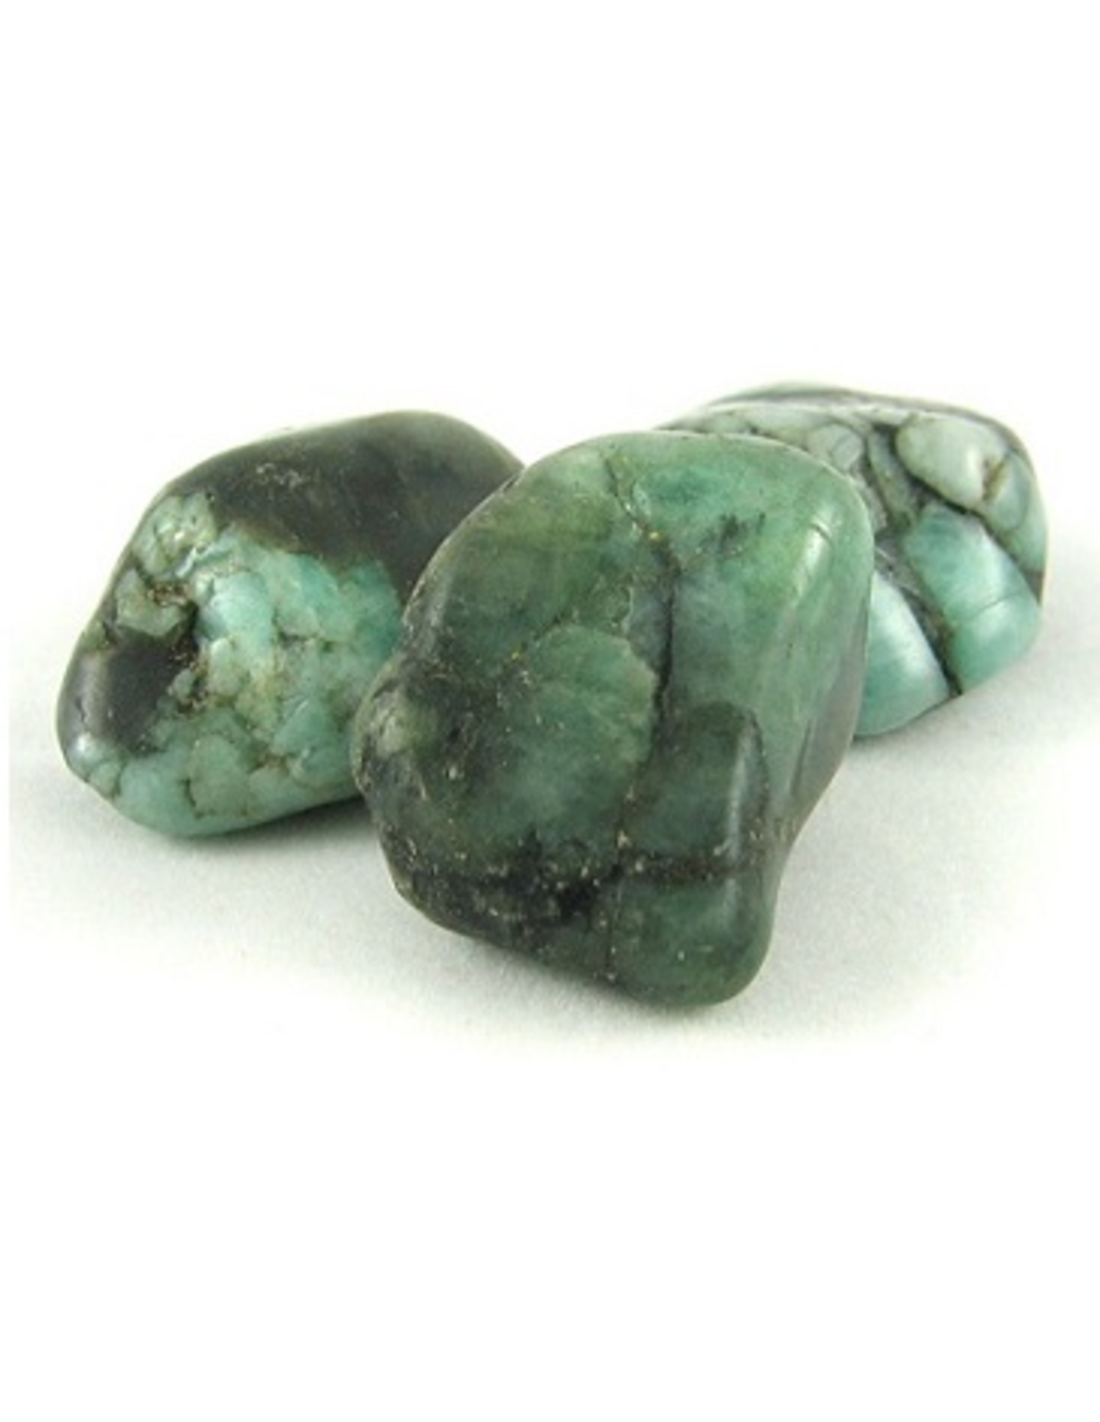 Smaragd 3 st. trommelstenen ca. 25-35 mm